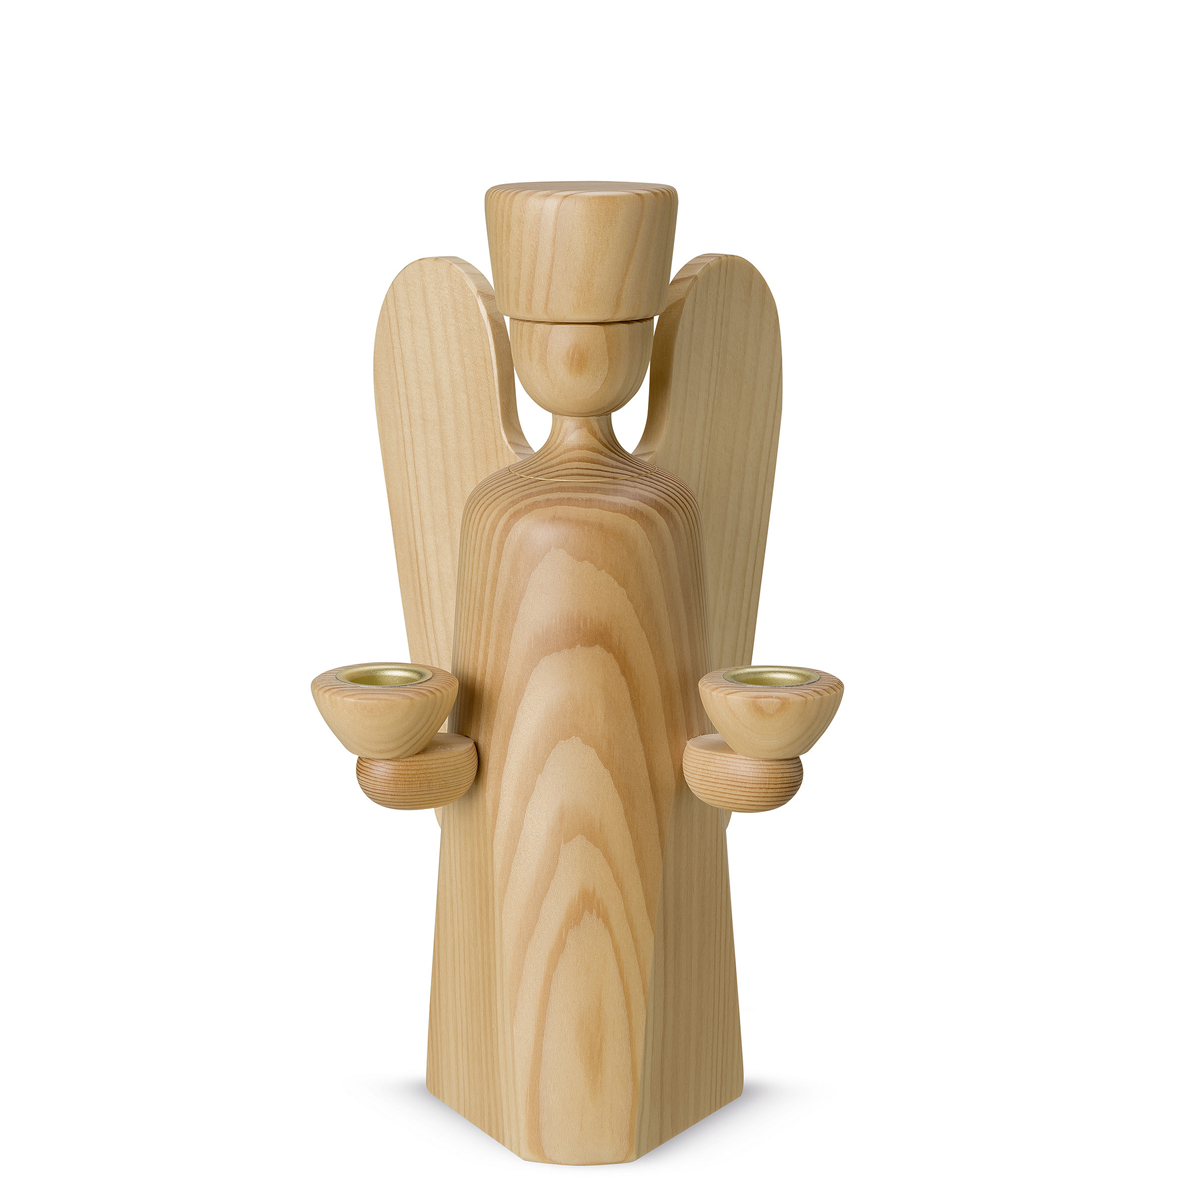 Angel candle holder, medium, natural wood